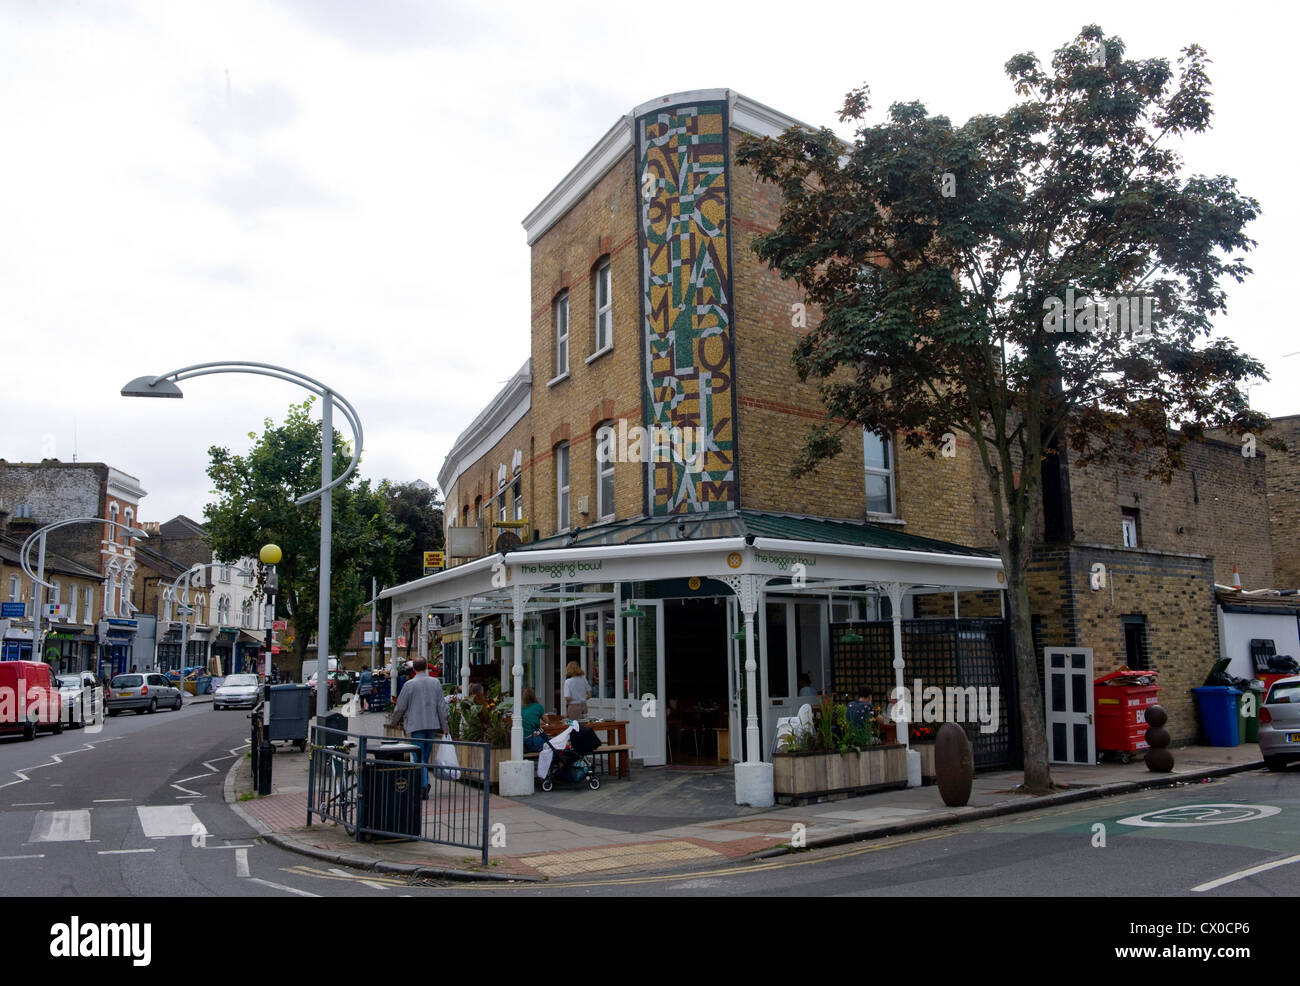 The Begging Bowl Thai restaurant in Bellenden Road, Peckham, London, Britain Stock Photo